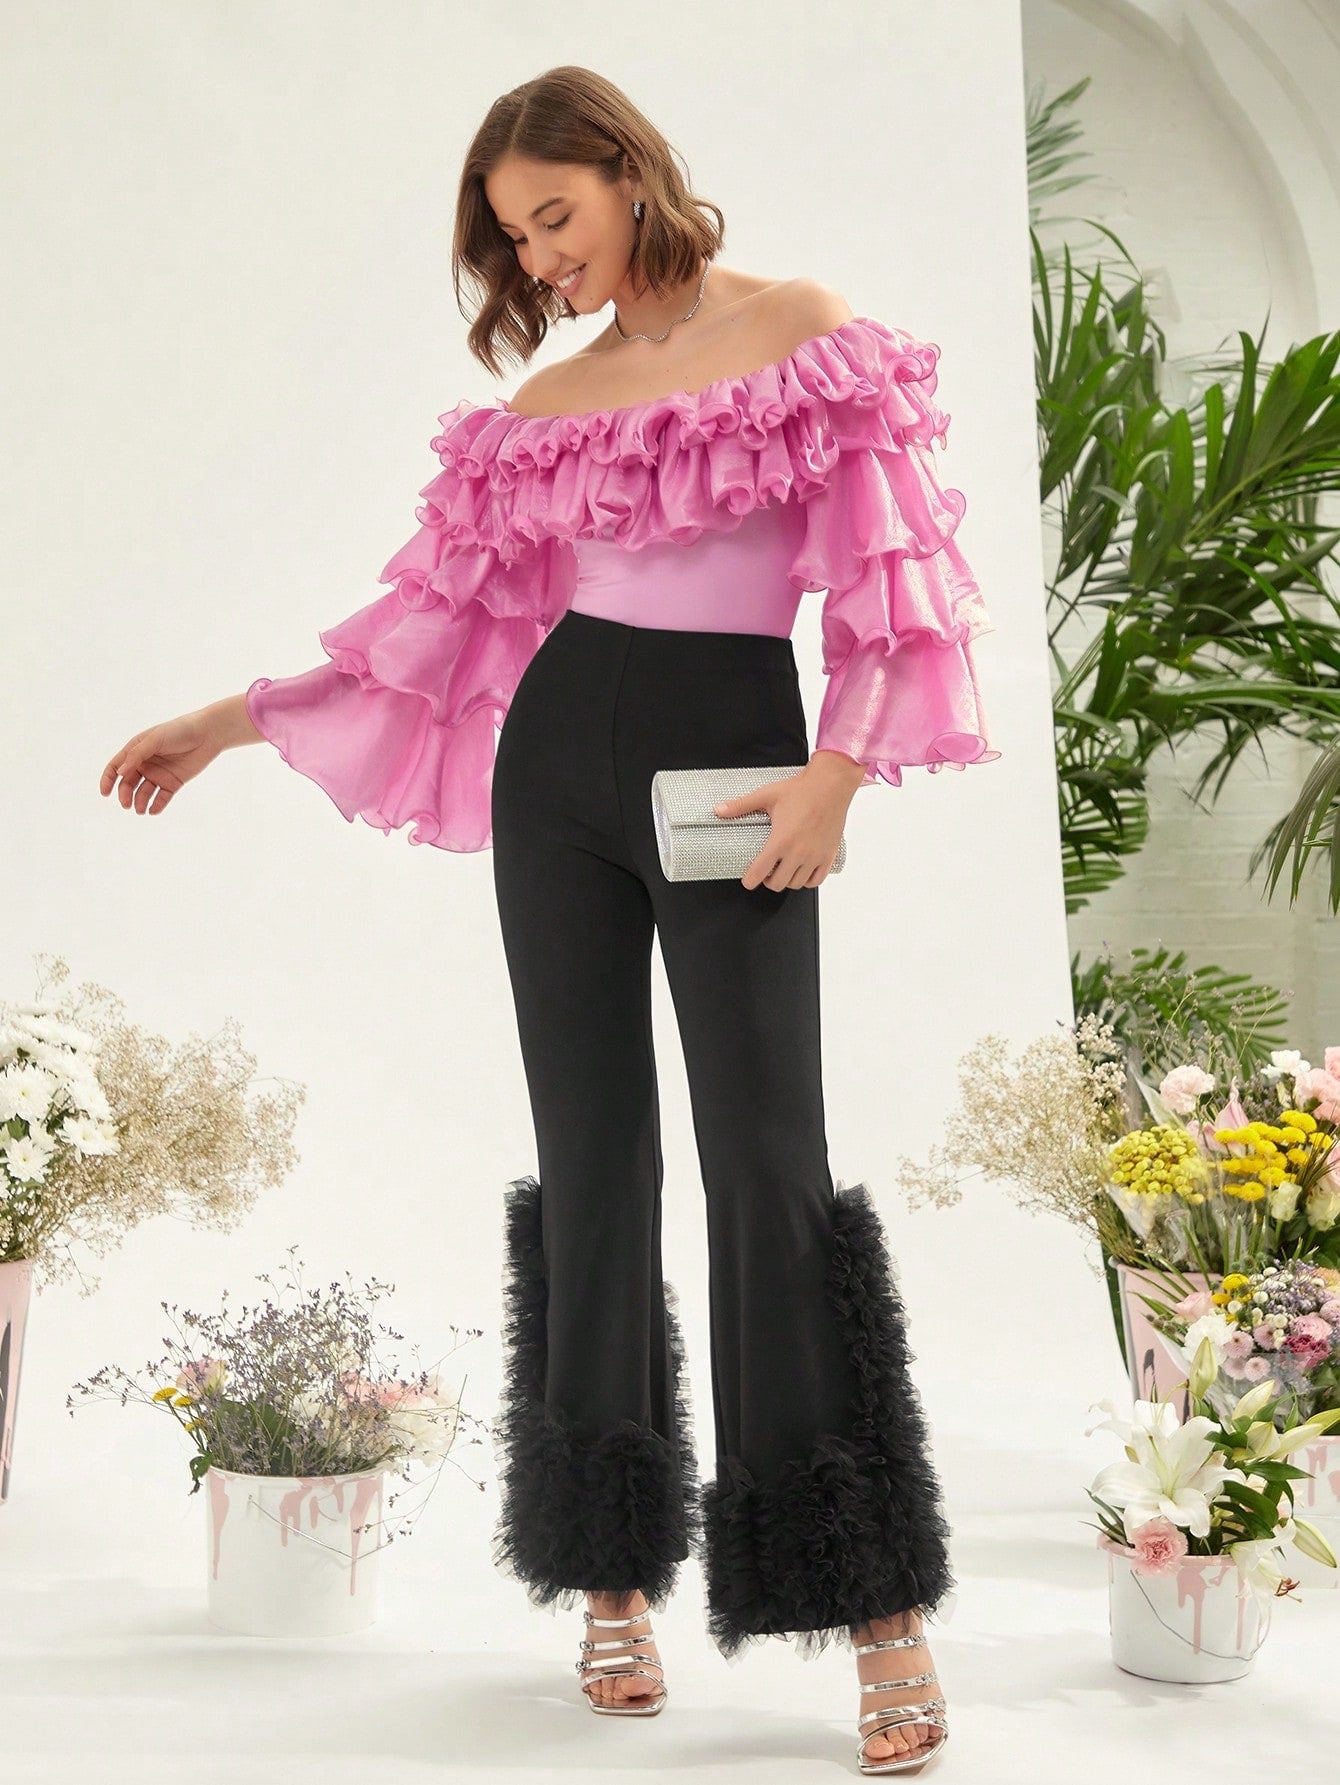 CM-BS234157 Women Elegant Seoul Style Contrast Mesh Flare Leg Pants - Black